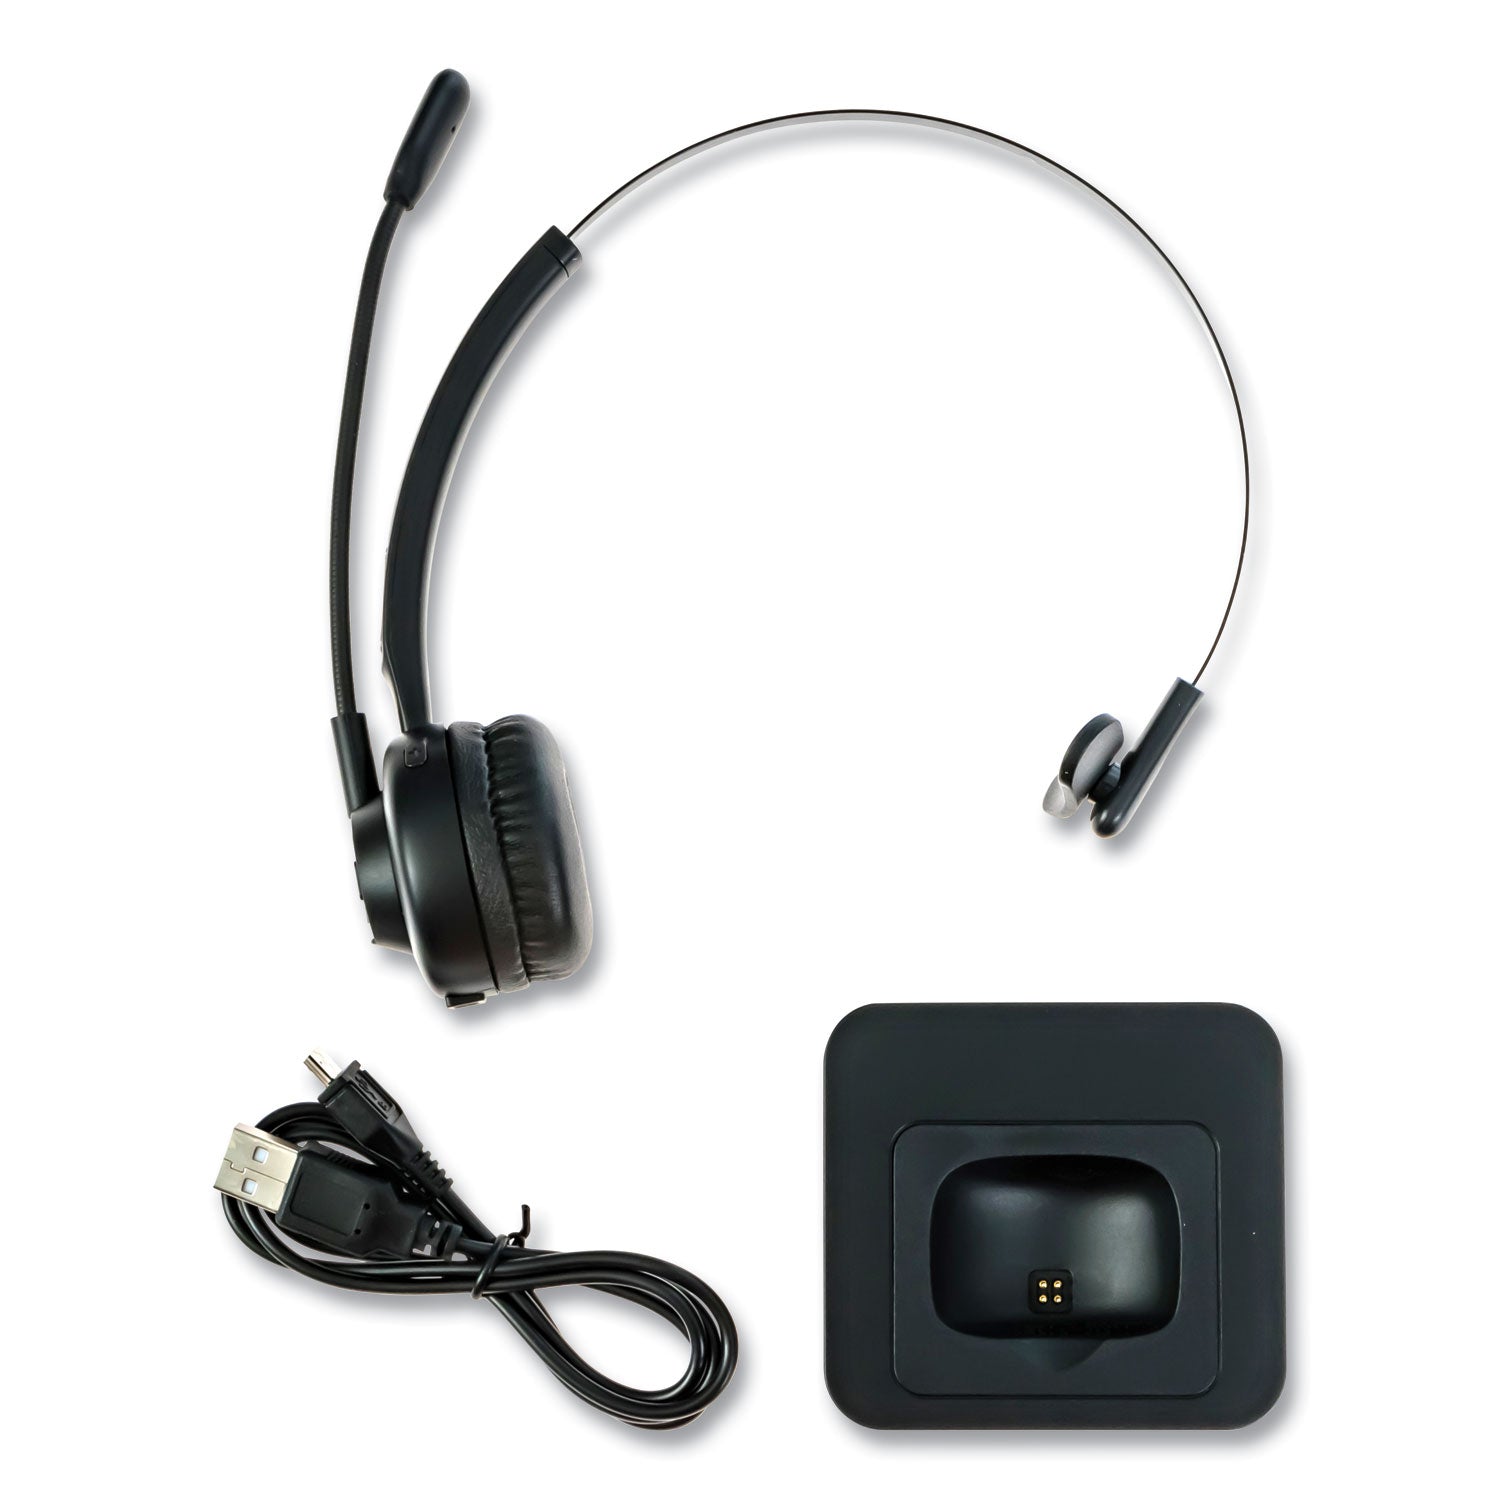 zum-bt-mobile-office-monaural-over-the-head-headset-black_sptzumbt - 1